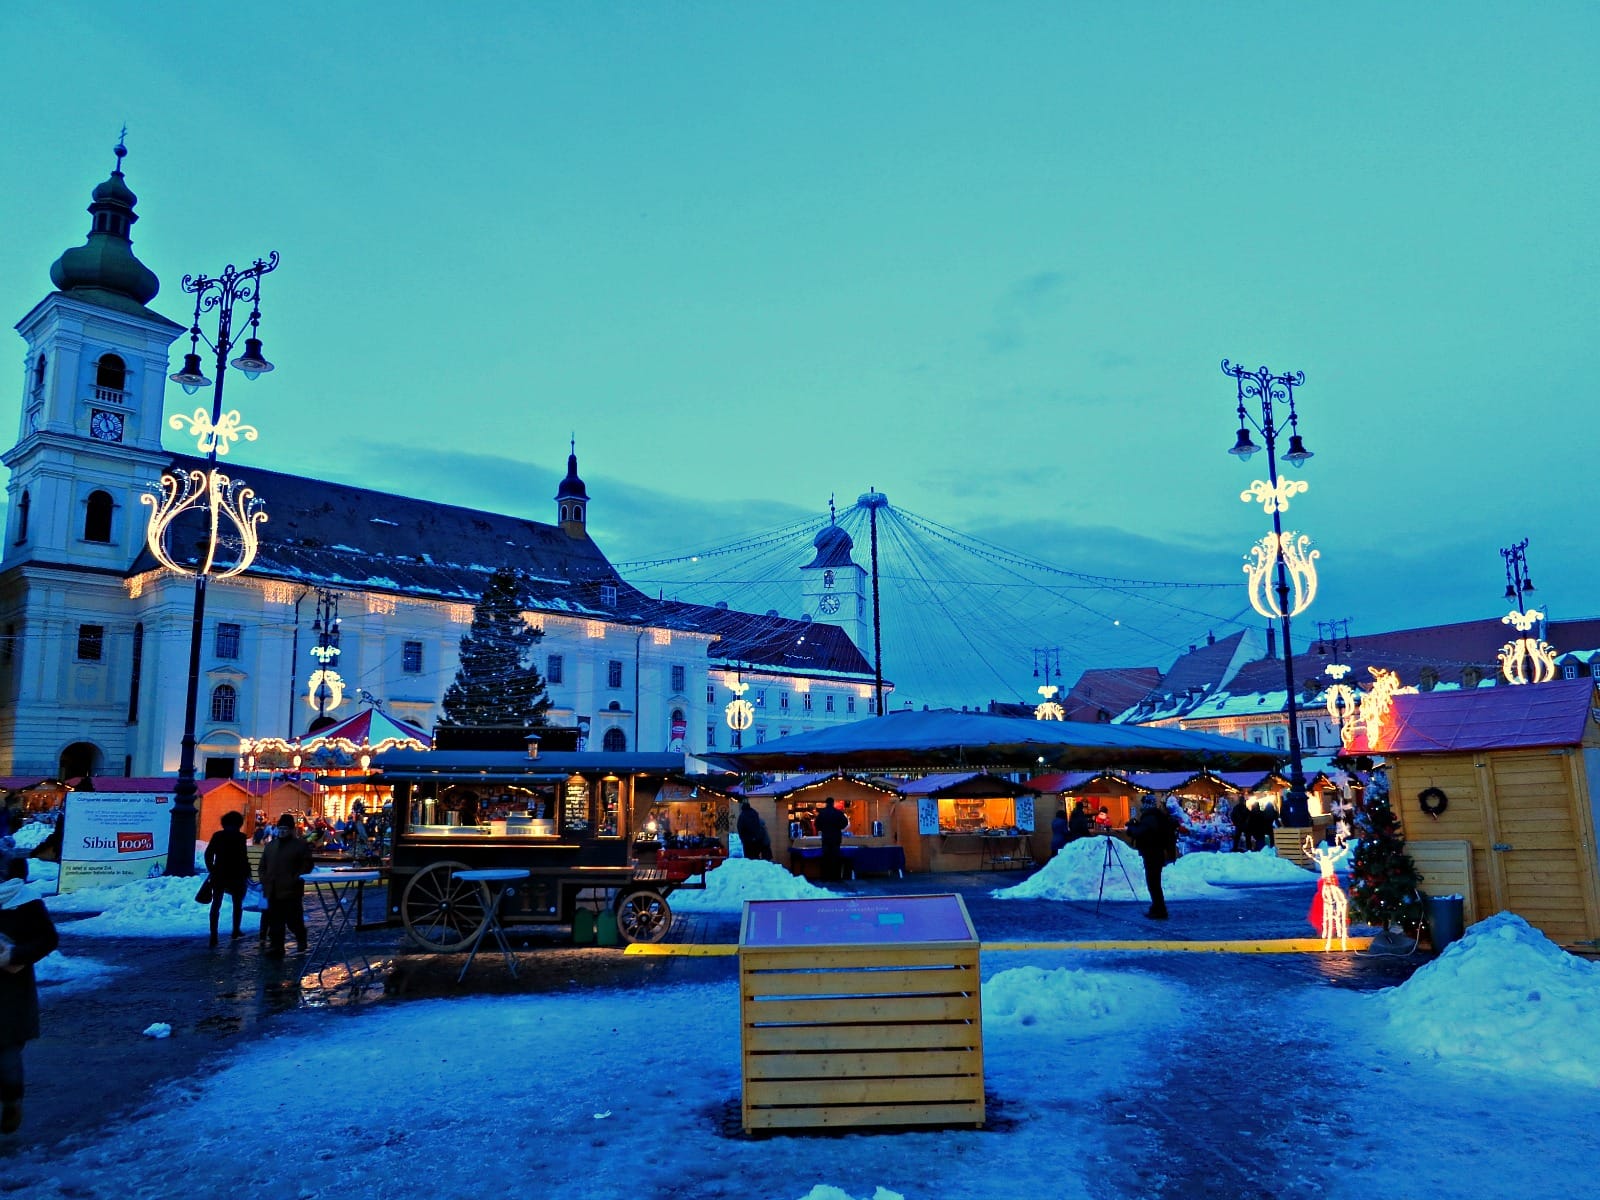 Sibiu Old Town during Christmas